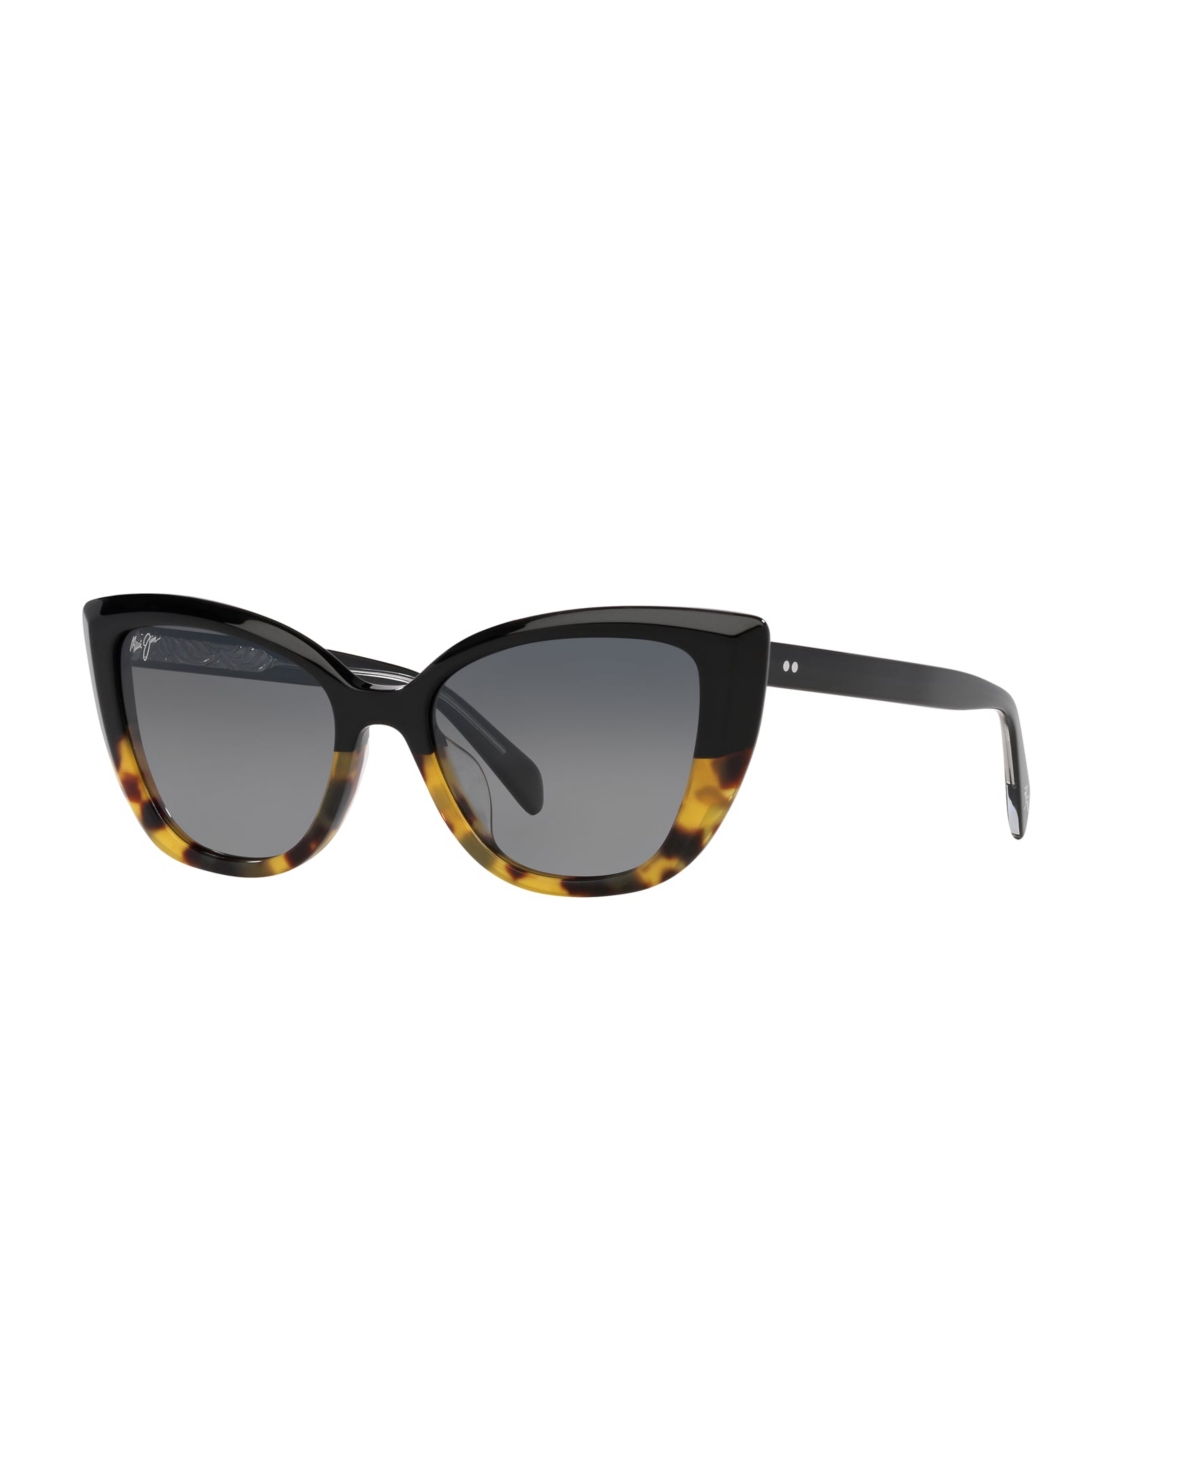 Maui Jim Women's Polarized Sunglasses, Blossom Mj000736 In Black Brown